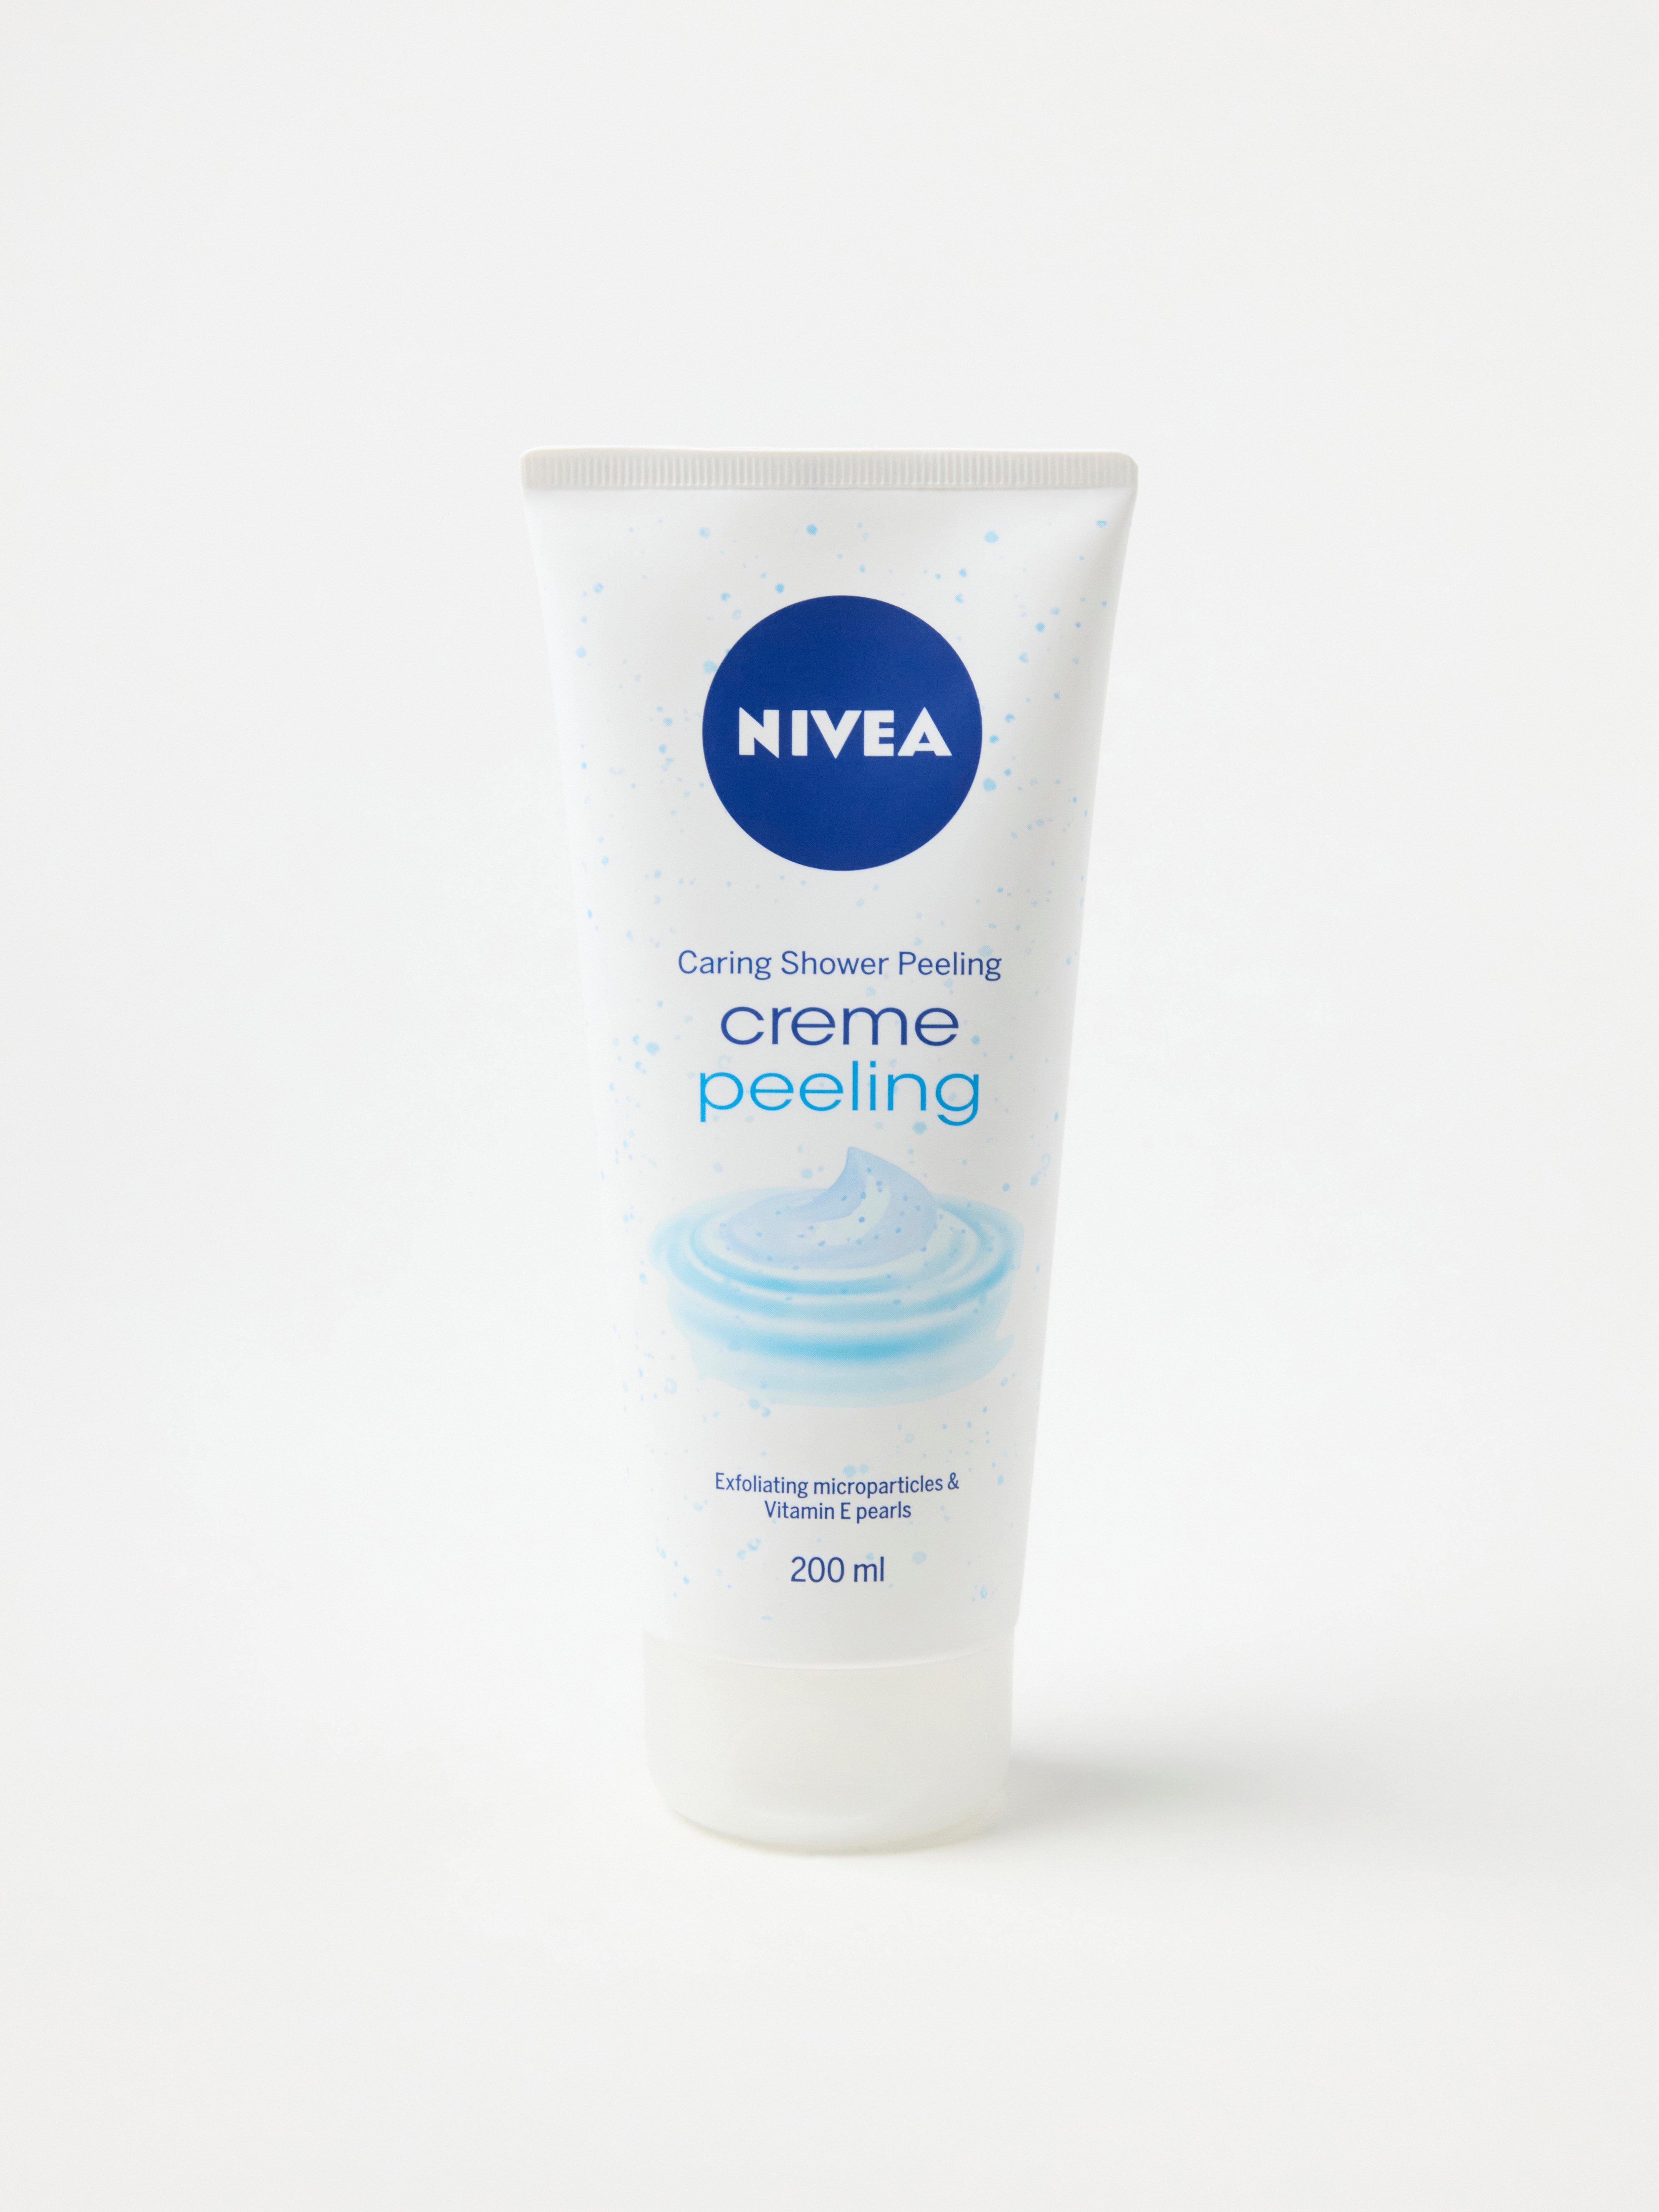 NIVEA Creme Peeling Shower